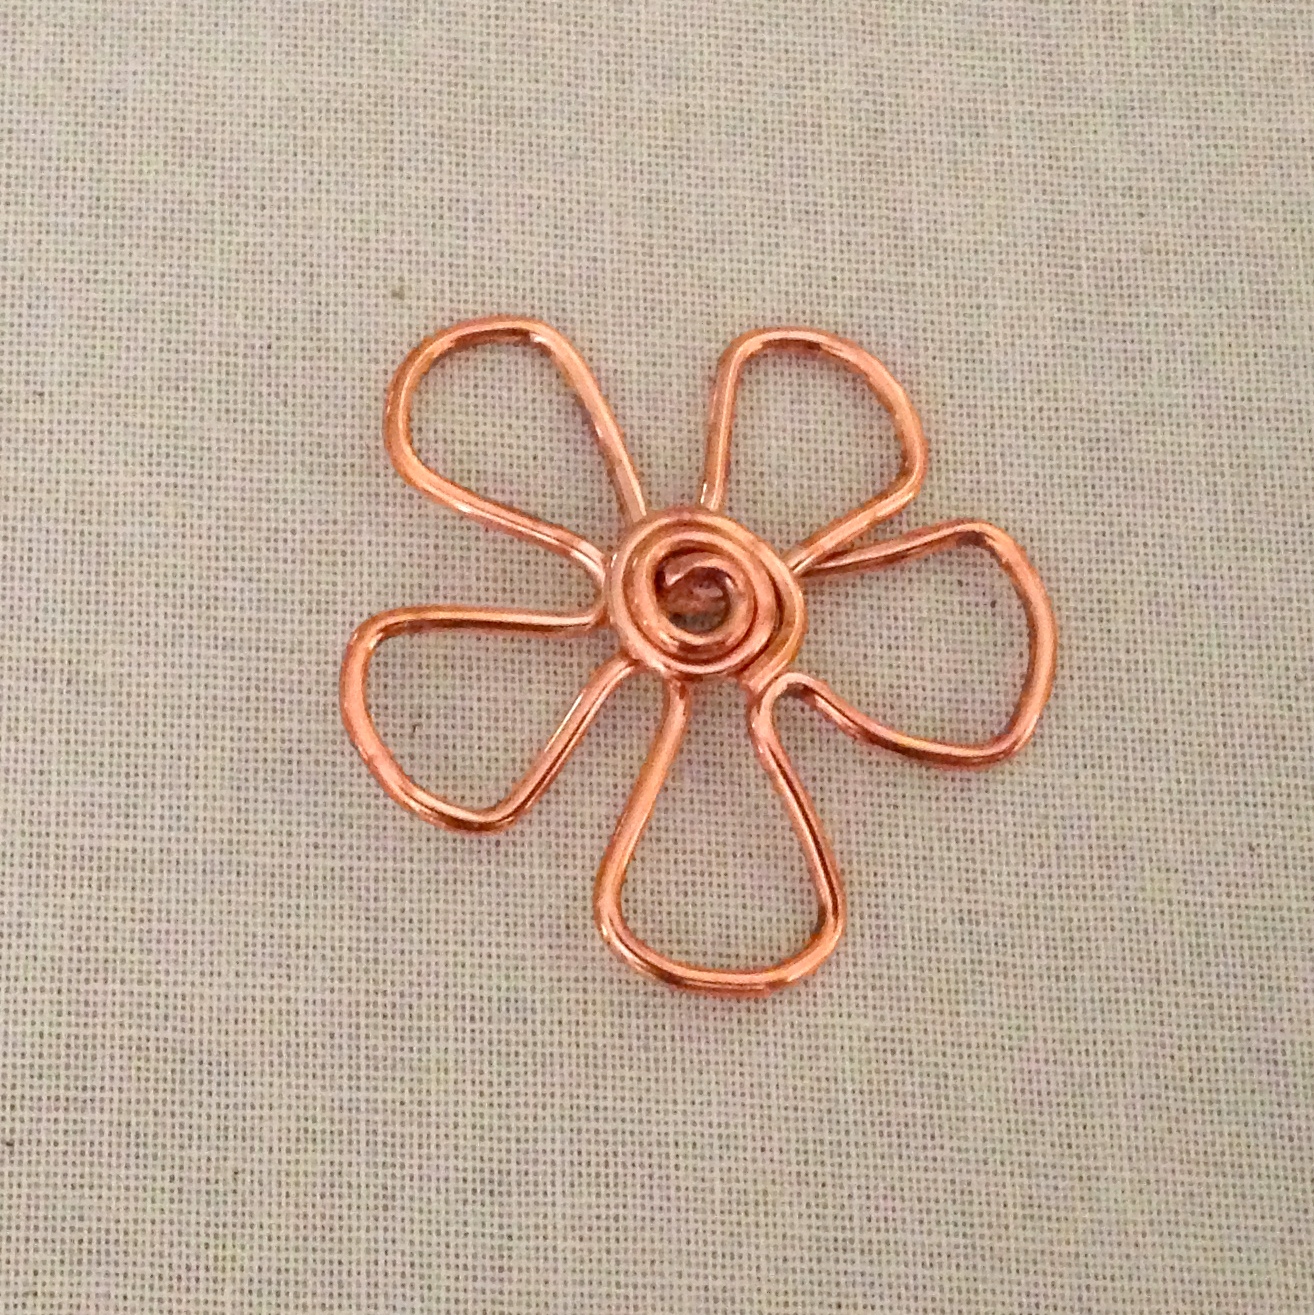 Copper Wire Flower by Lisa Yang Jewelry, Free Tutorial, DIY